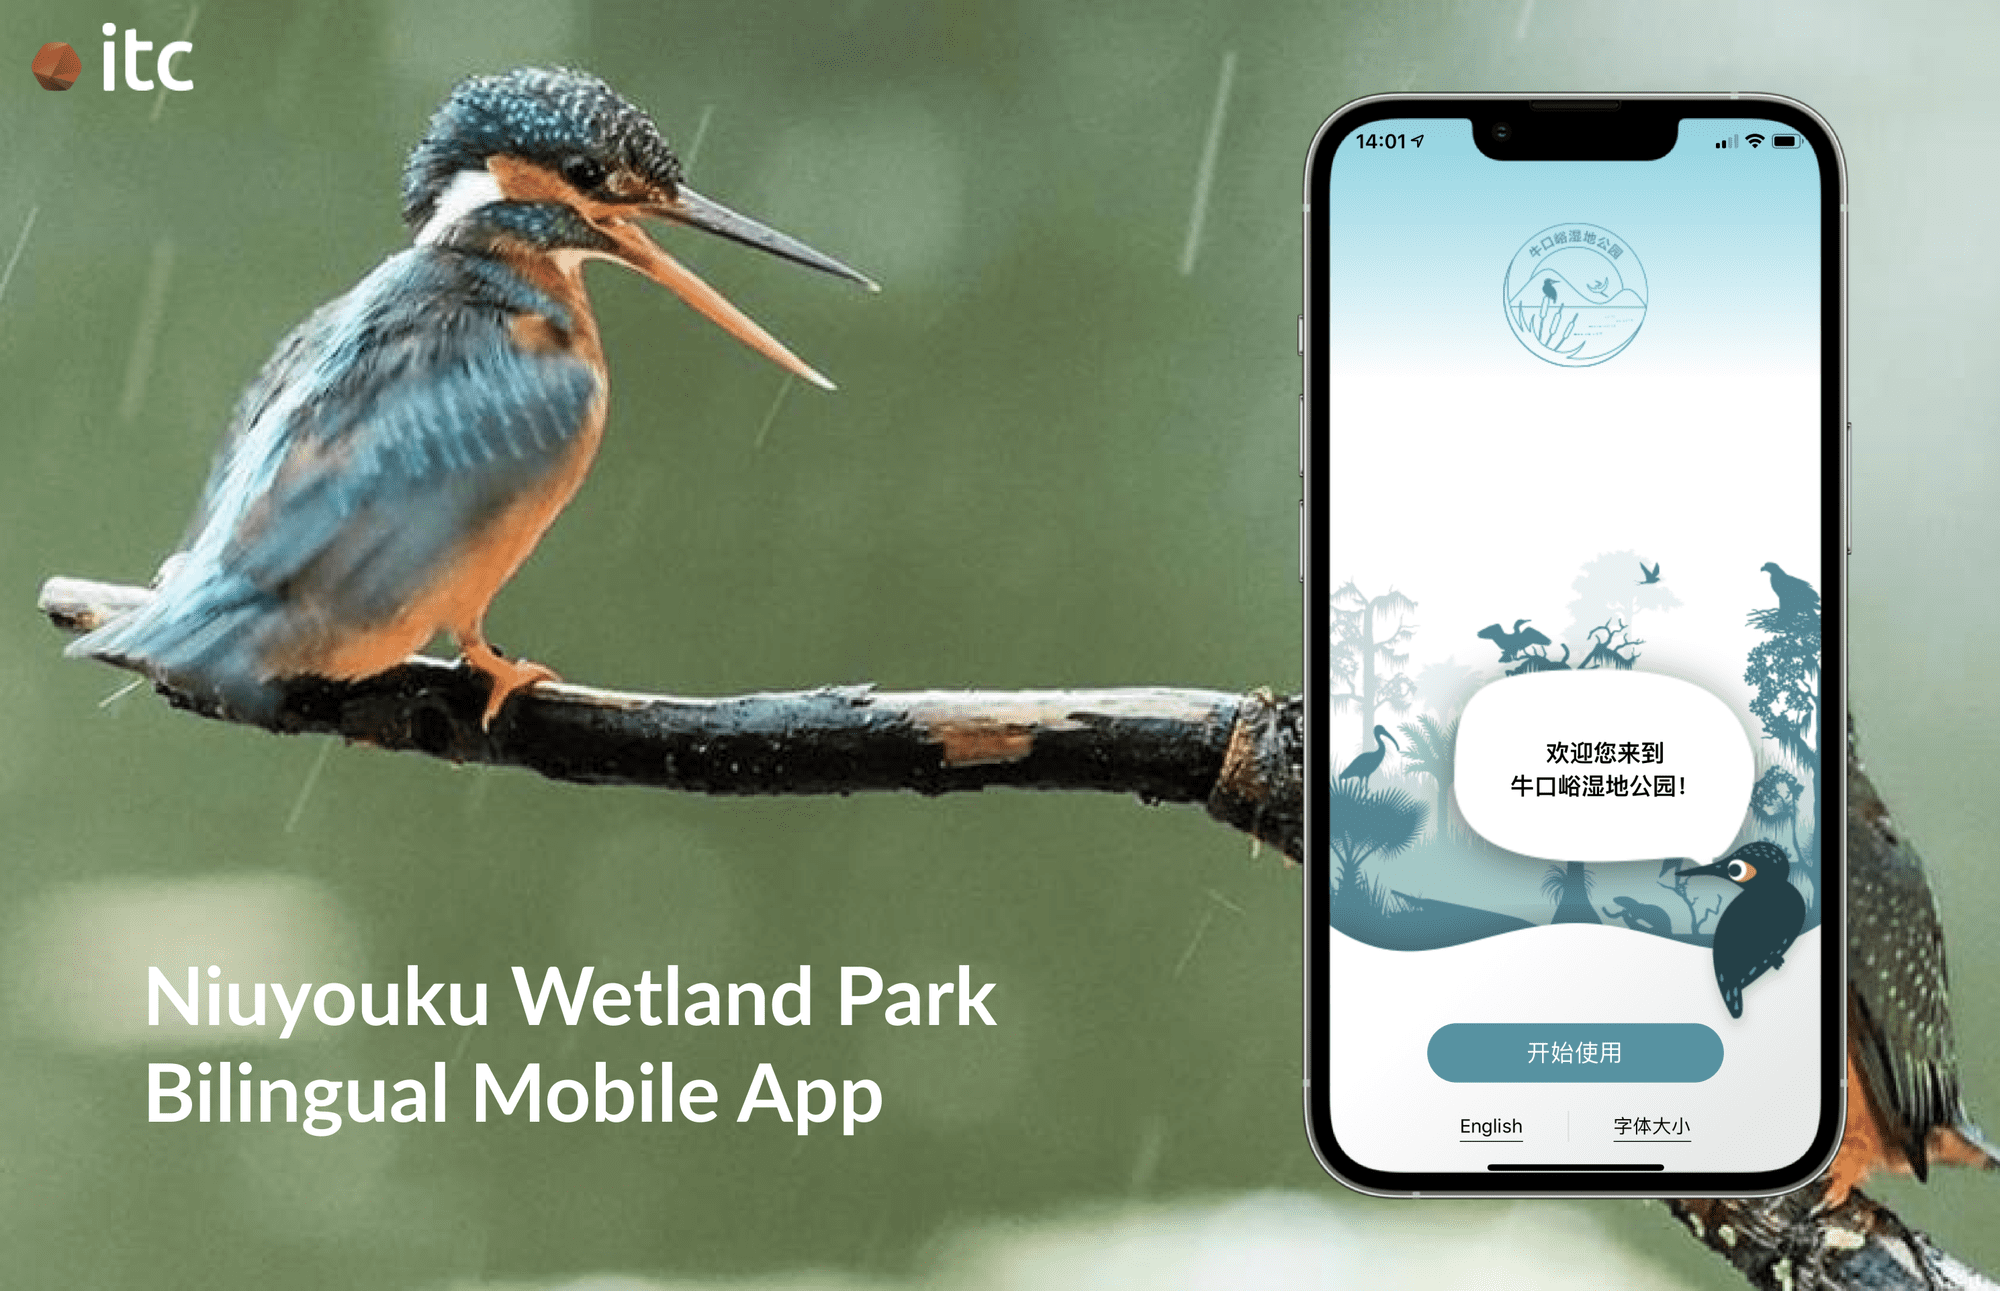 The Homepage of the Veolia Niuyouku Wetland Park Bilingual mobile application